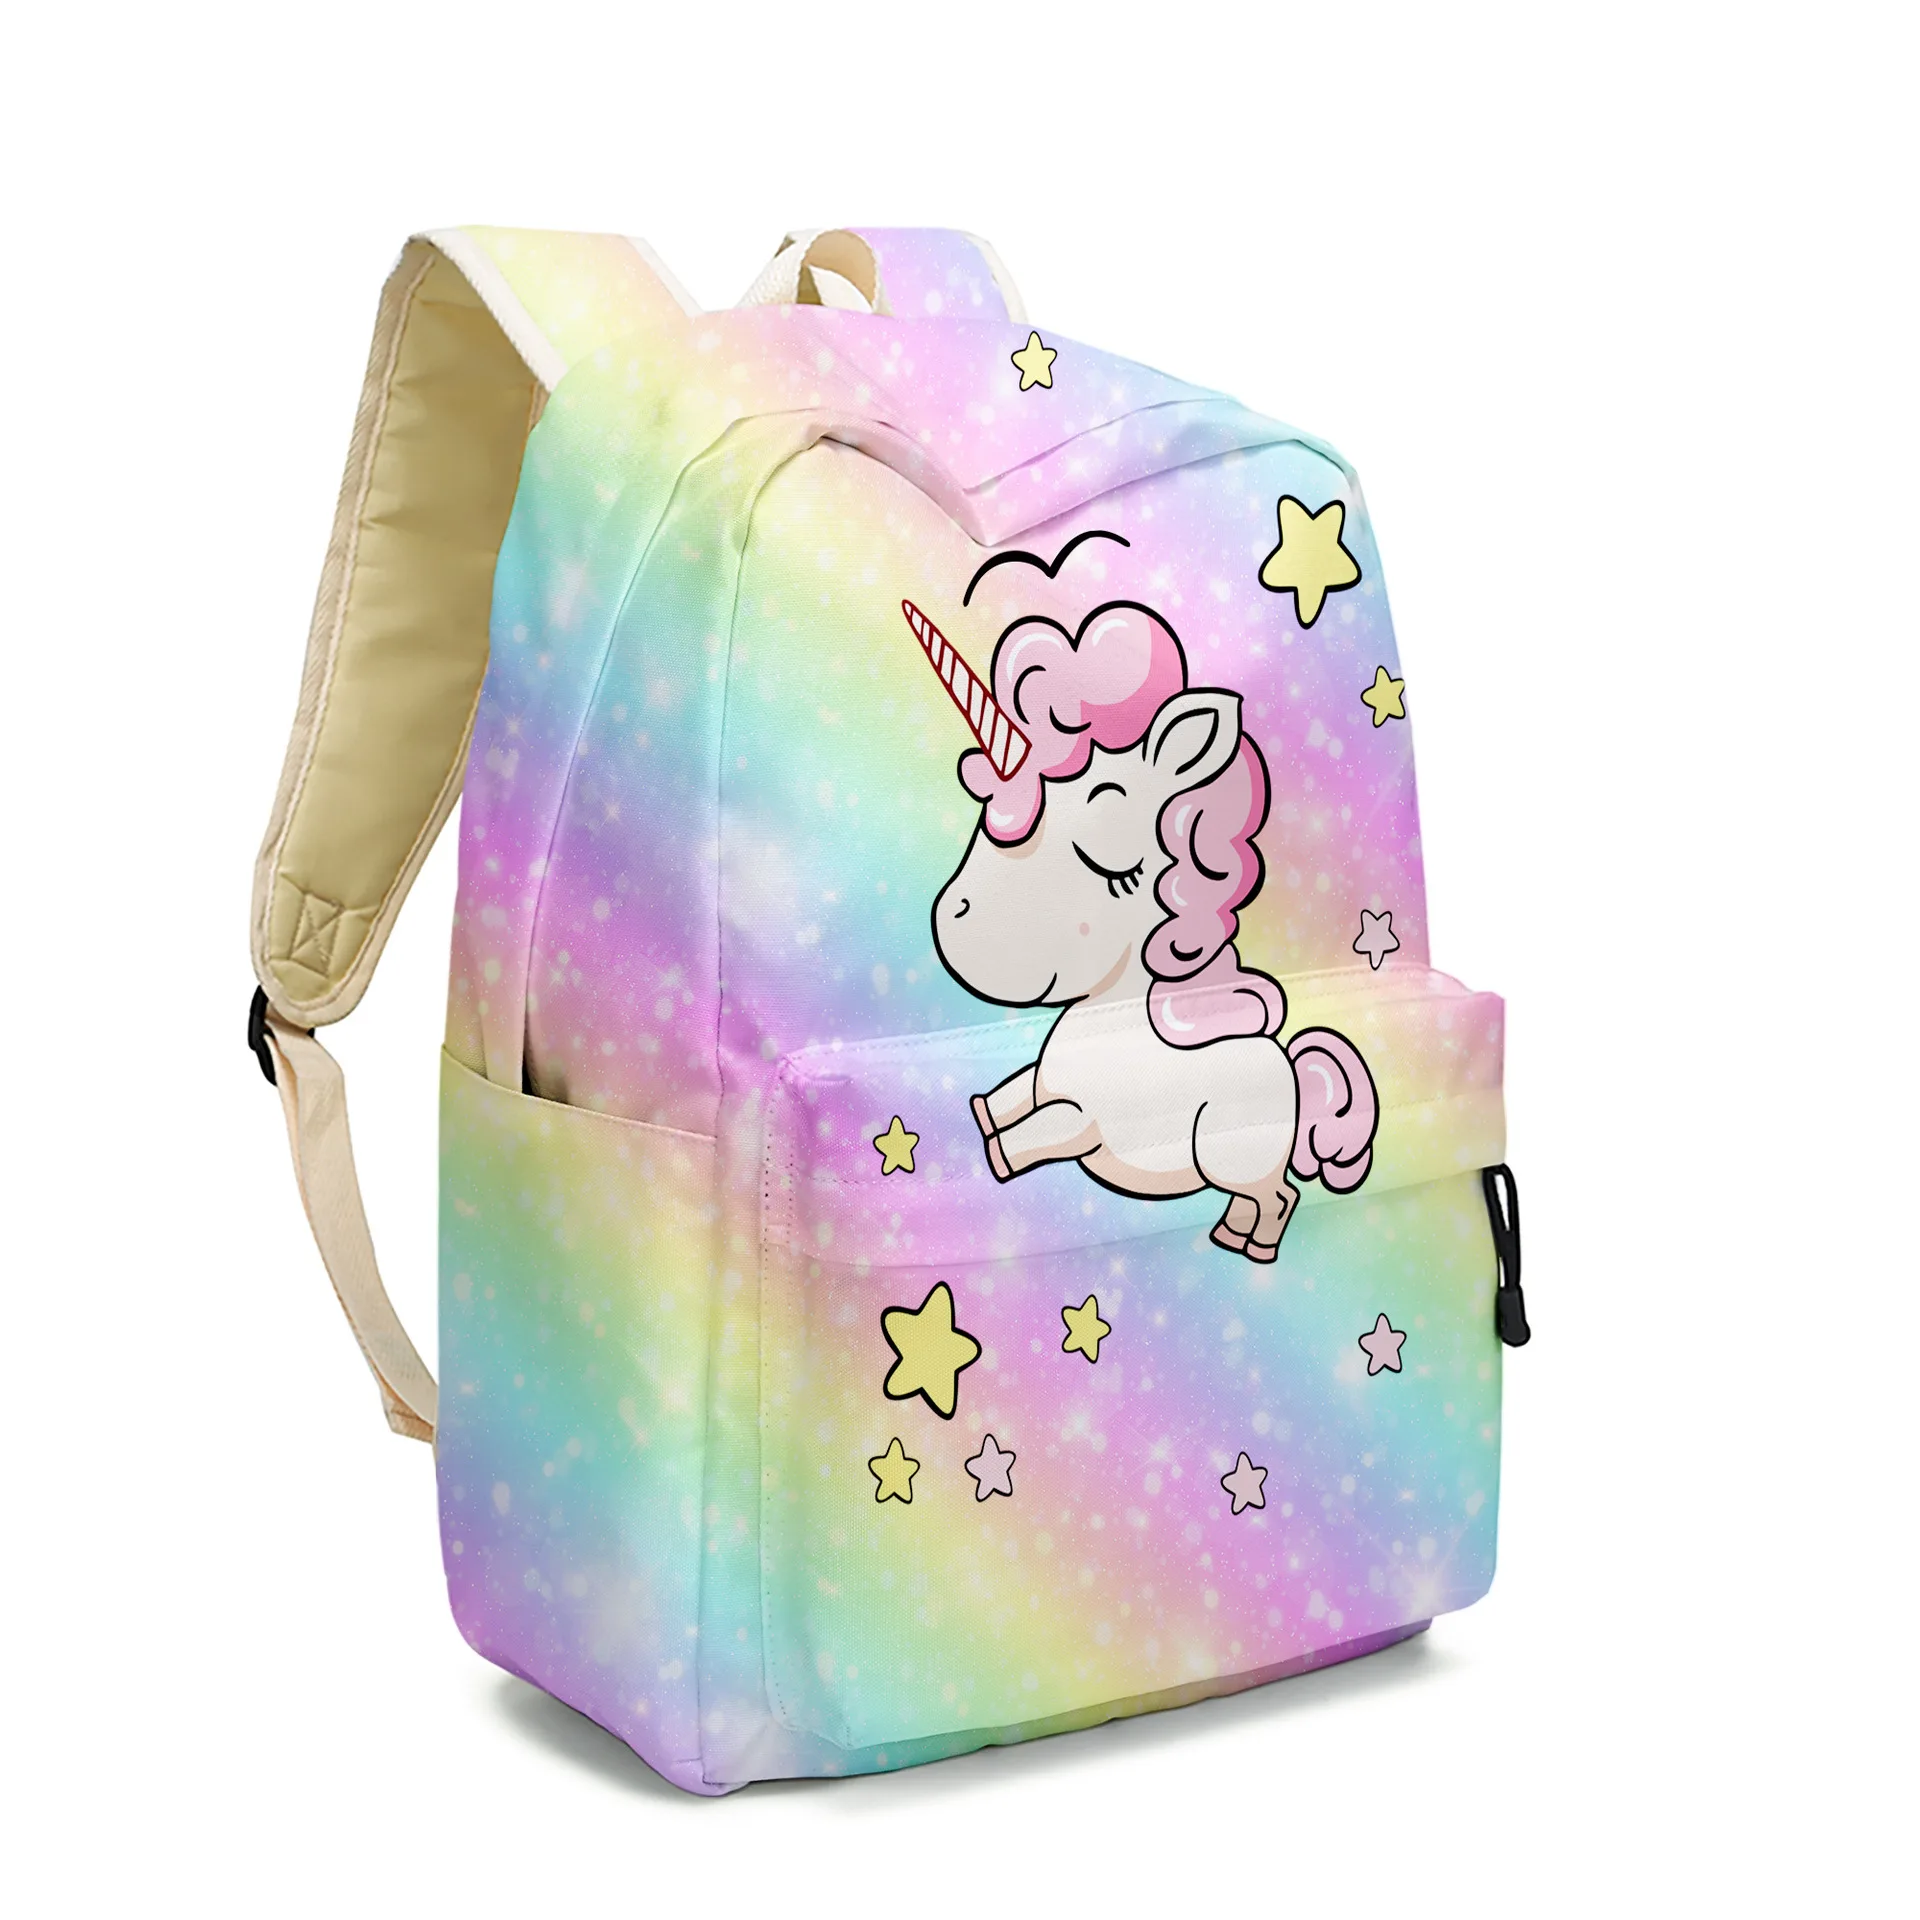 

Cute Unicorn School Bag Elementary Fashion Lightweight Backpack Children Daypack Rucksack 2021 New Arrival Mochila